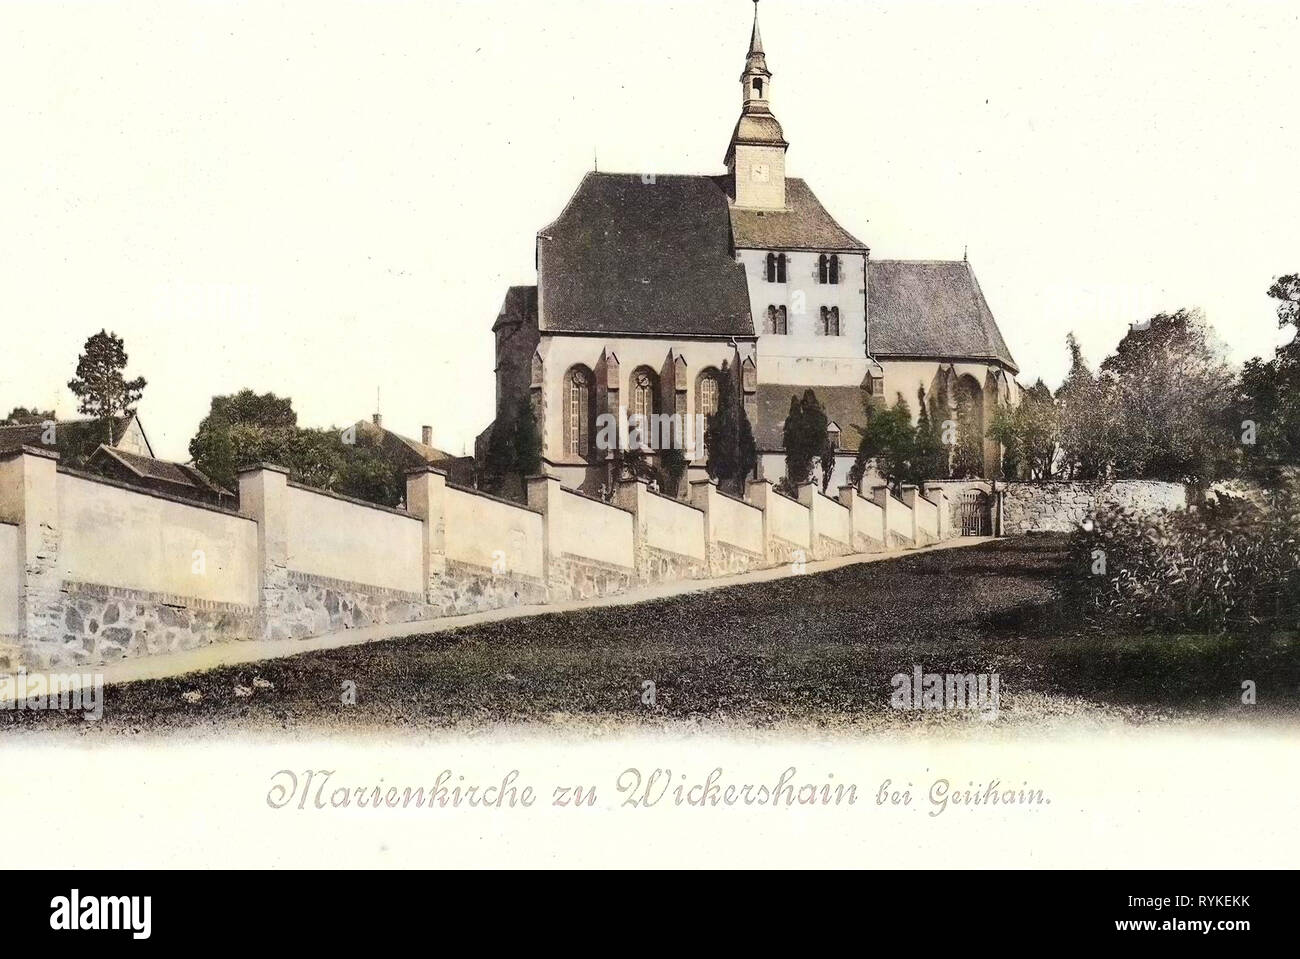 1901, Landkreis Leipzig, Wickershain, Marienkirche, Germany Stock Photo